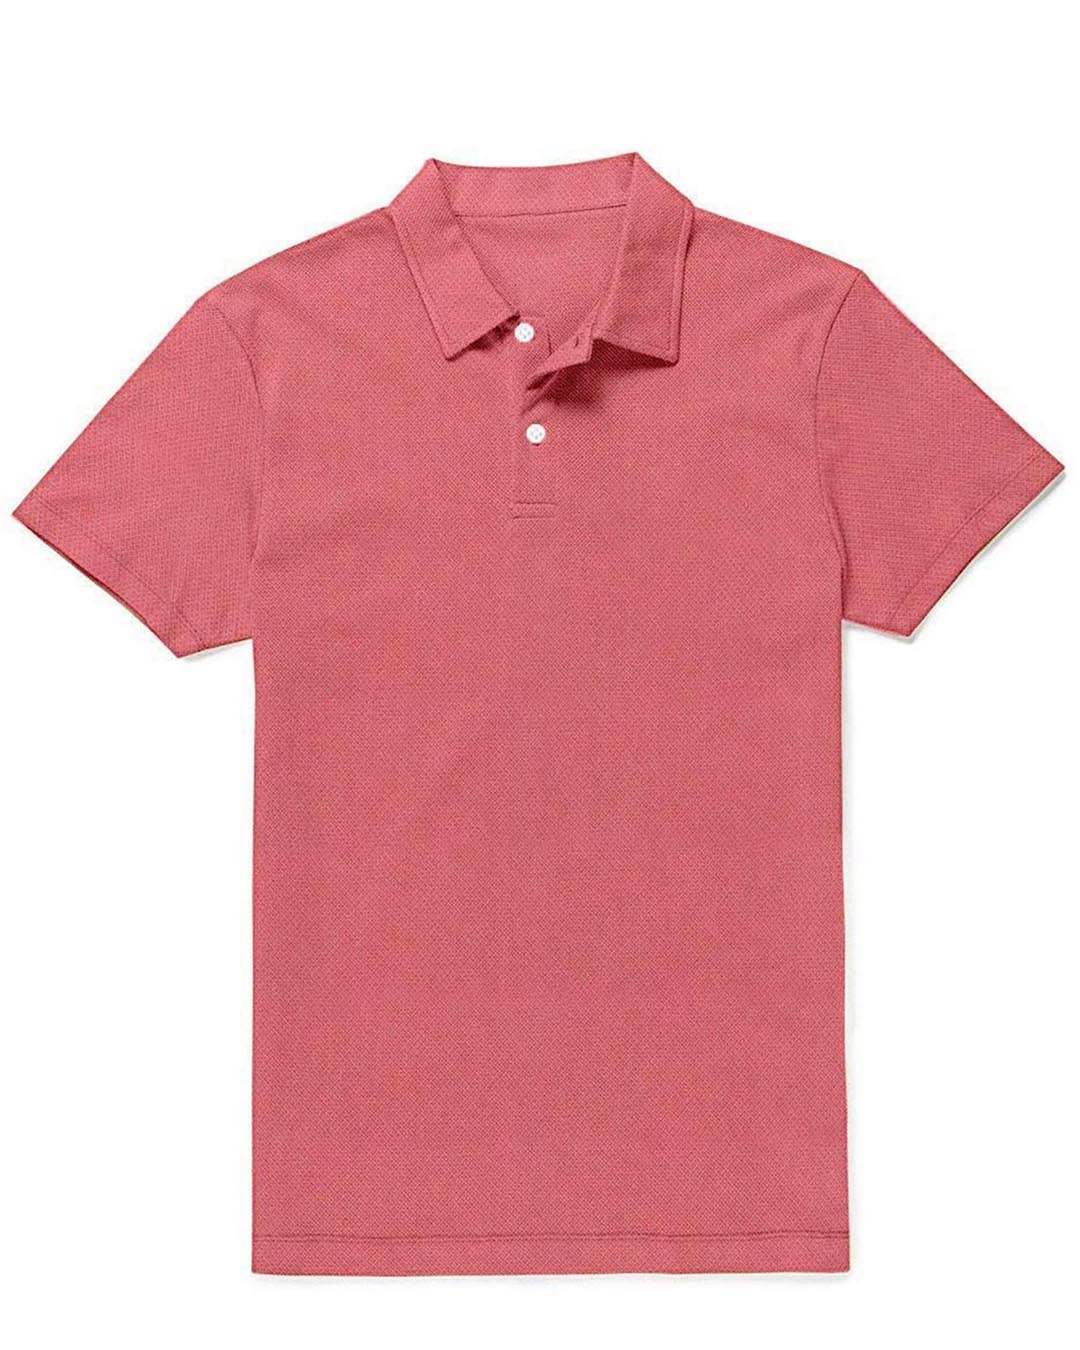 Salmon Pink T-shirt